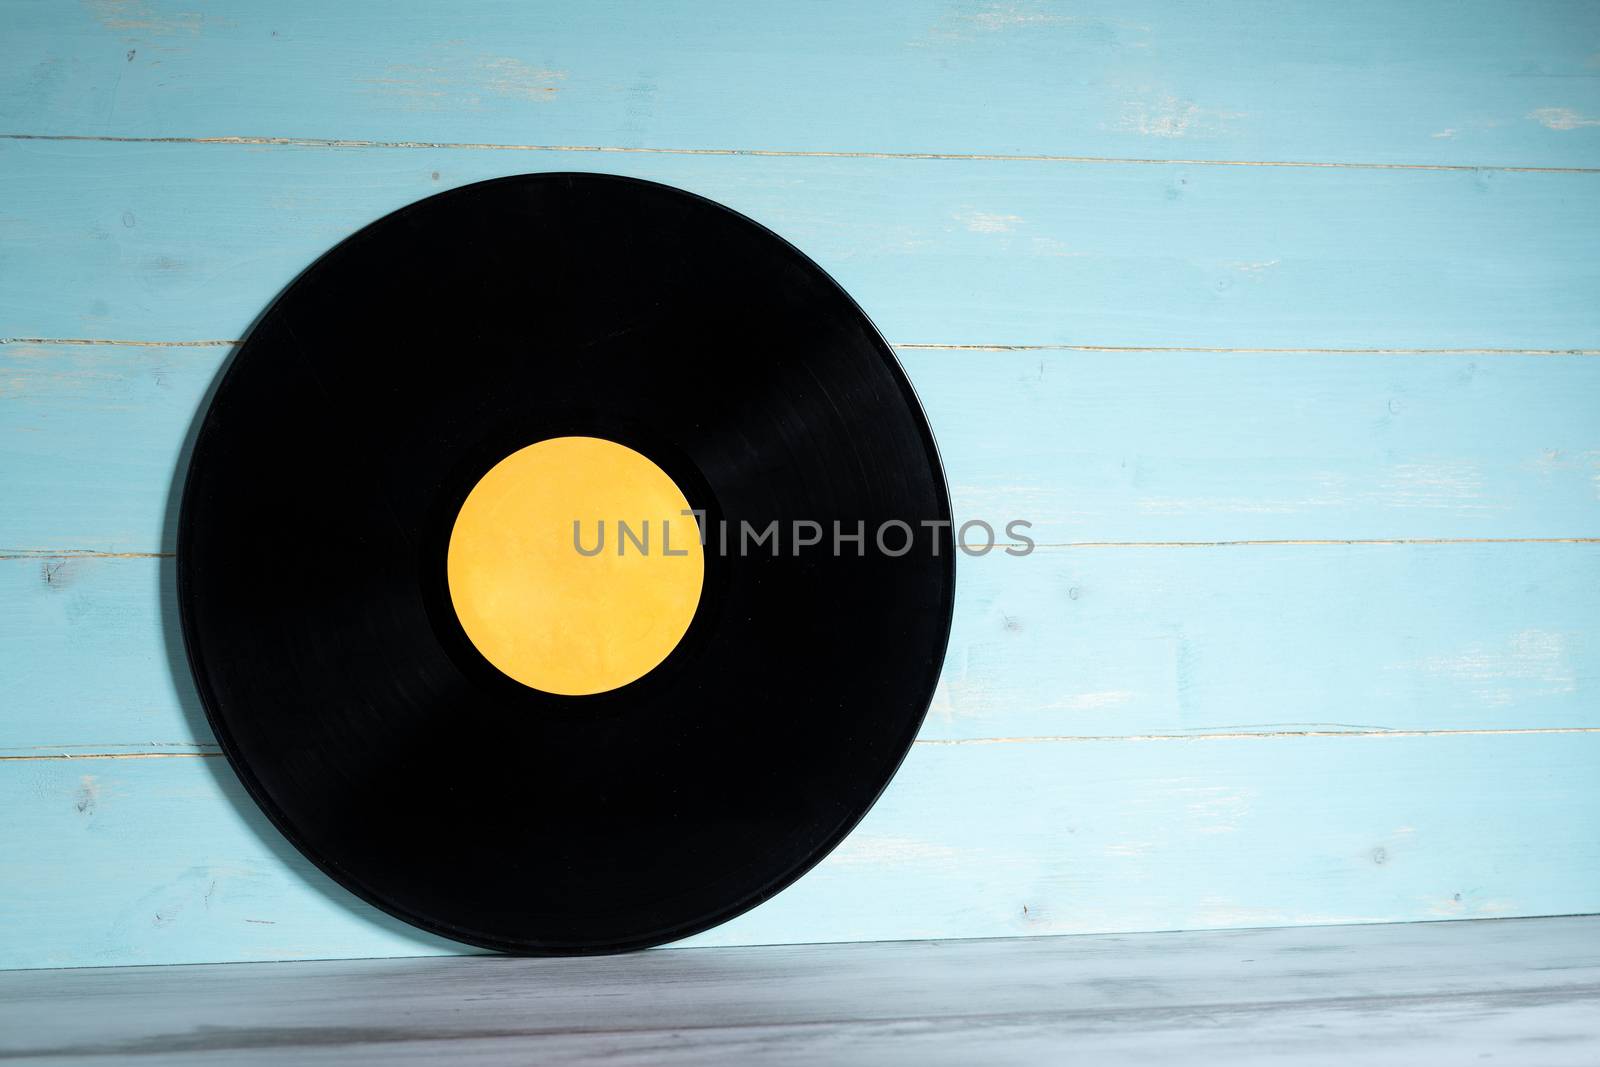 Vinyl record on blue wooden background by Robertobinetti70